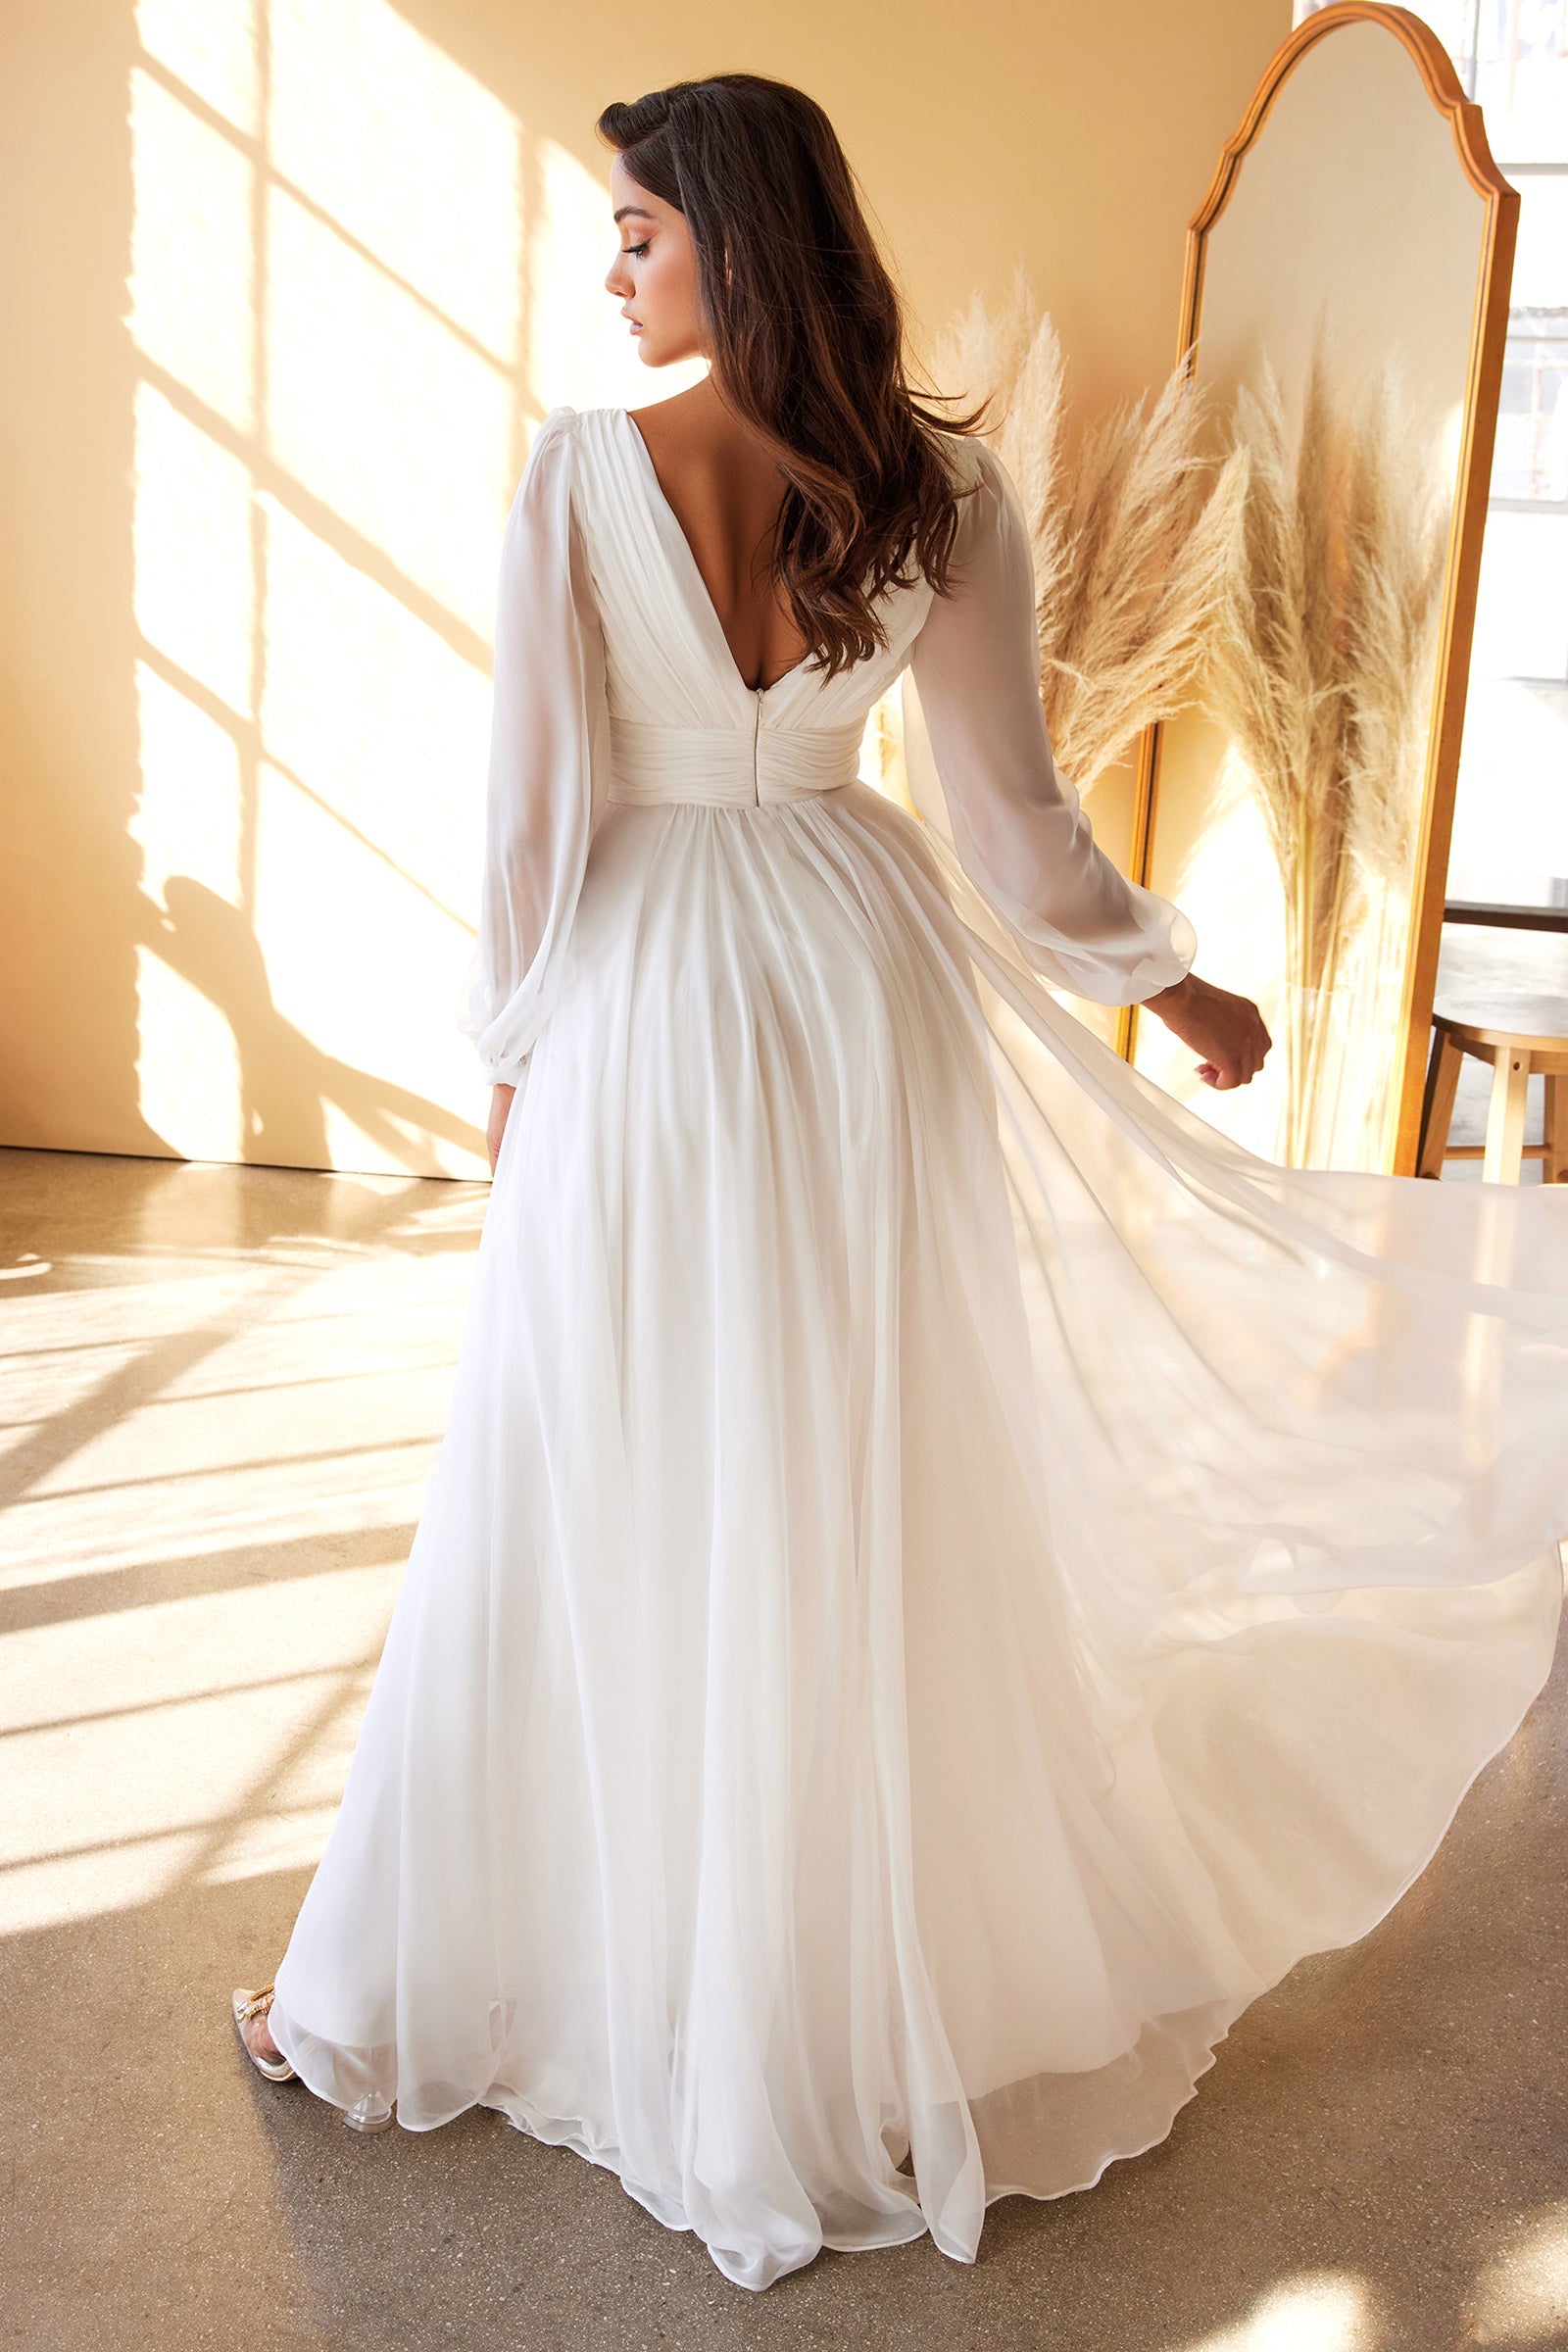 SWEETQT ALine Long Sleeves Wedding Dress Lace Appliques Tulle Princess  Bridal Dresses Elegant VNeck Sweep Train Wedding Gowns  Amazoncouk  Fashion